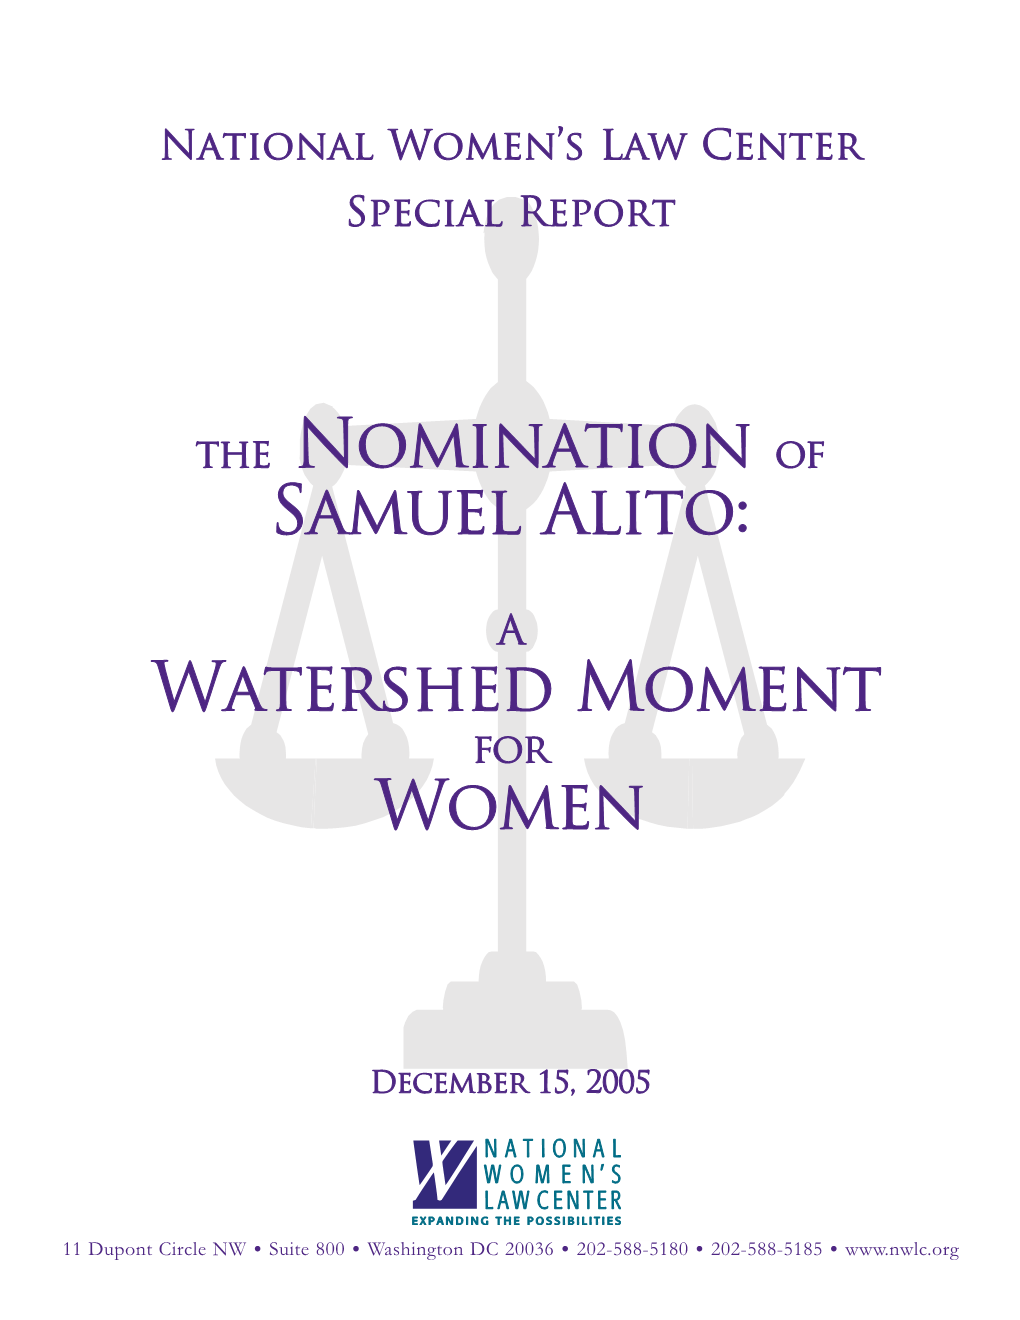 The Nomination of Samuel Alito